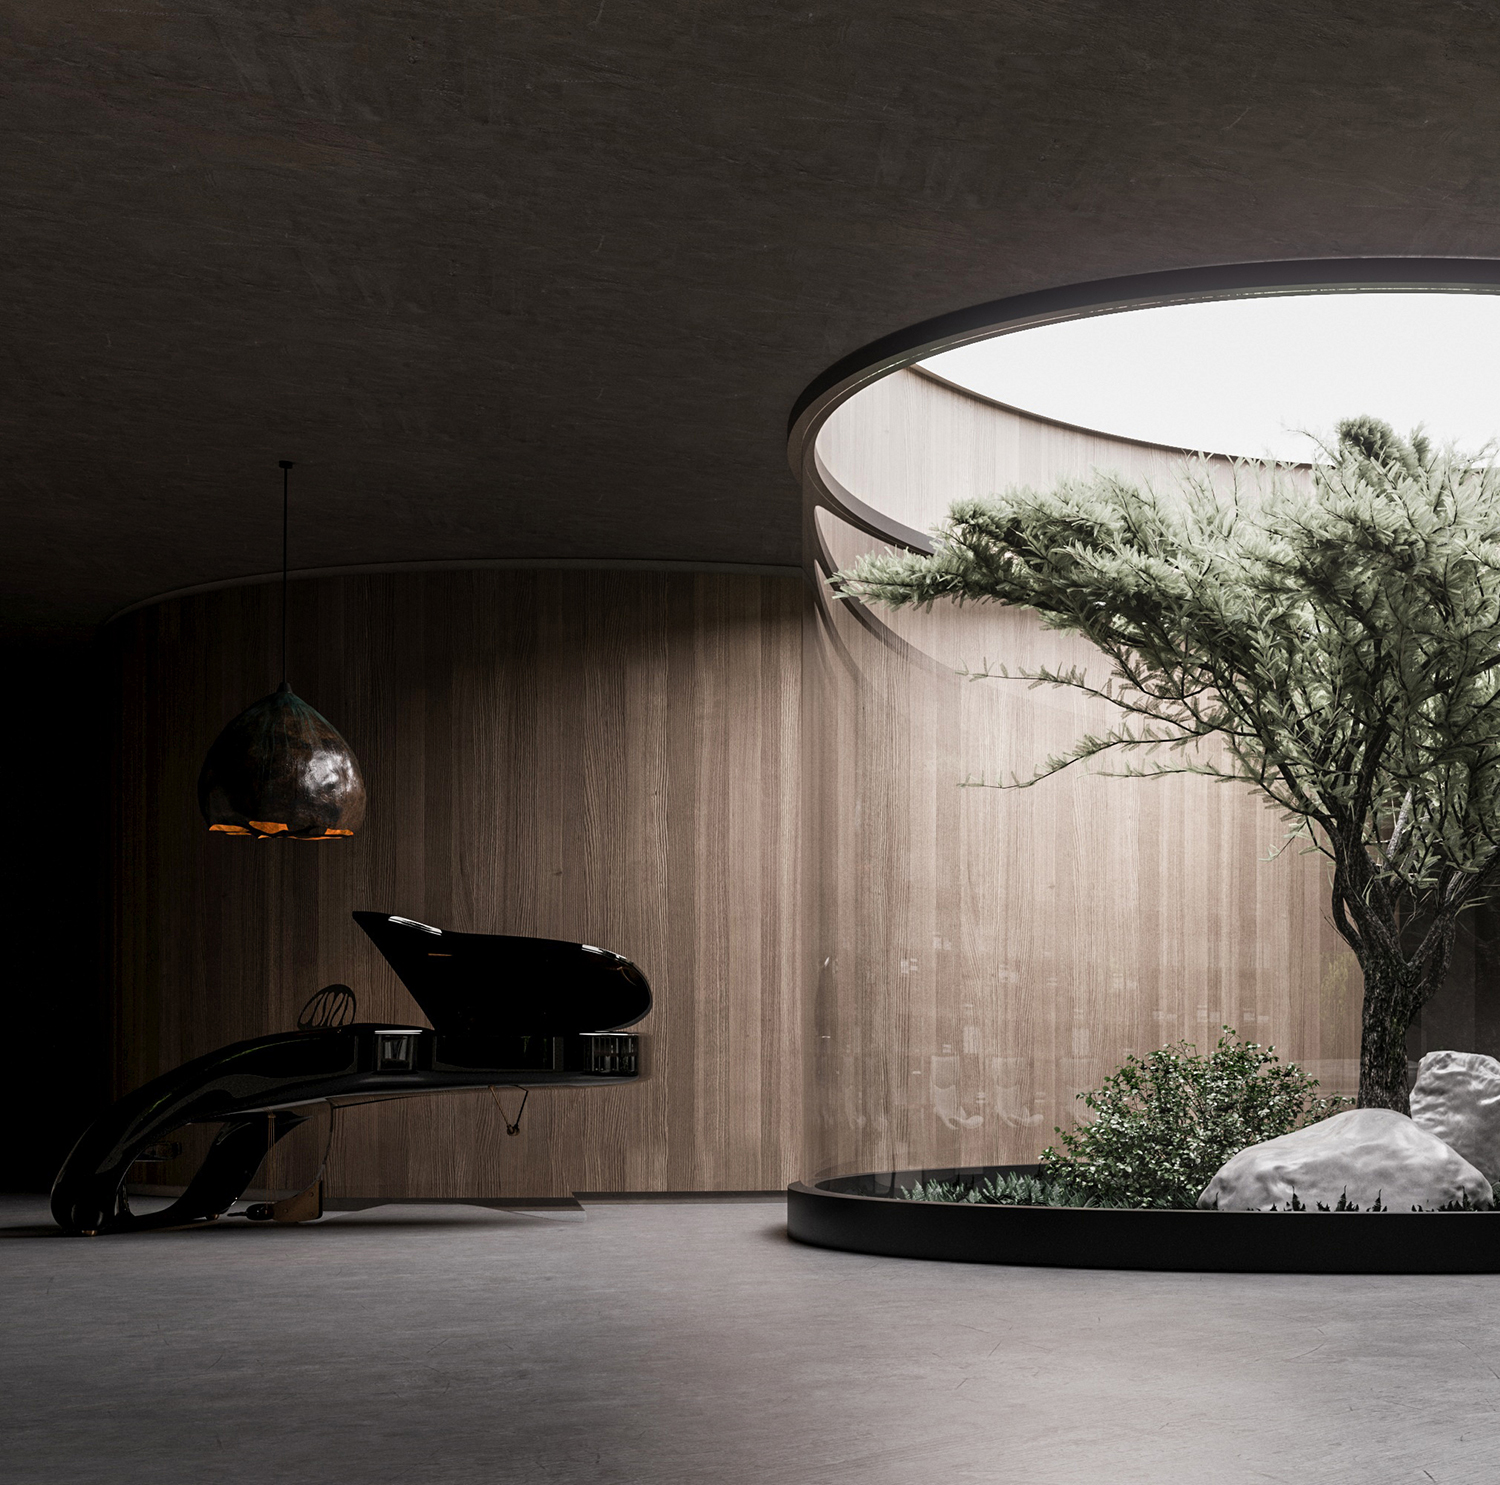 Underground House Plan B Oroject Concept / Sergey Makhno Architects